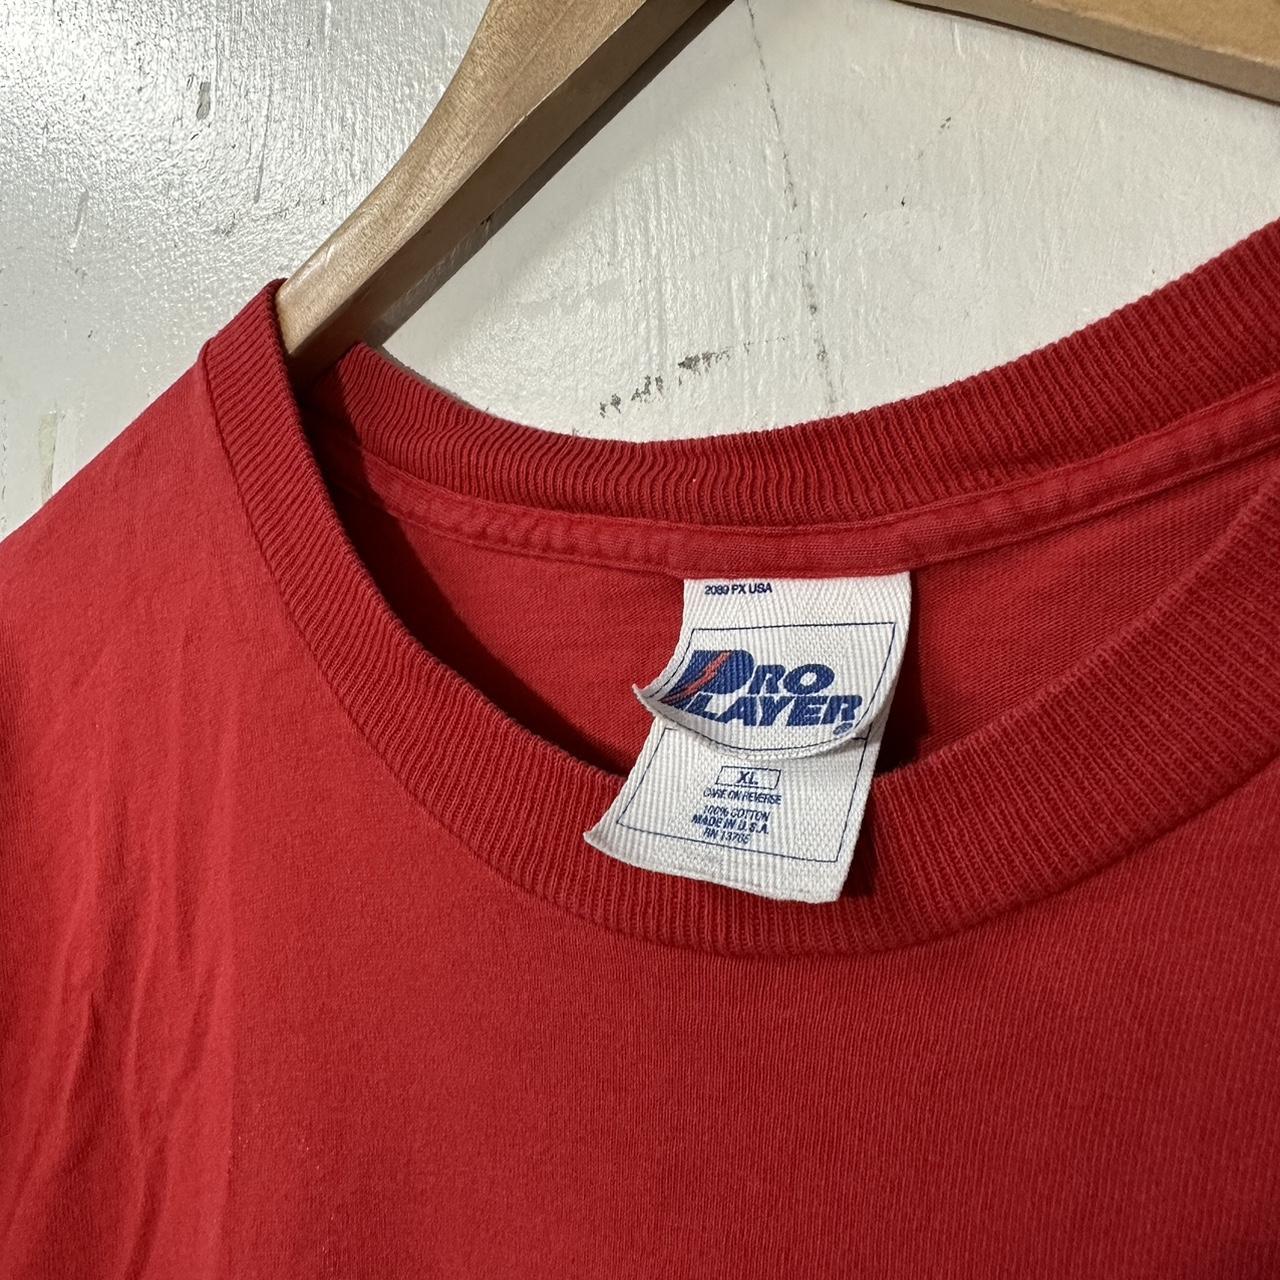 Pro Player Men's Shirt - Red - XL